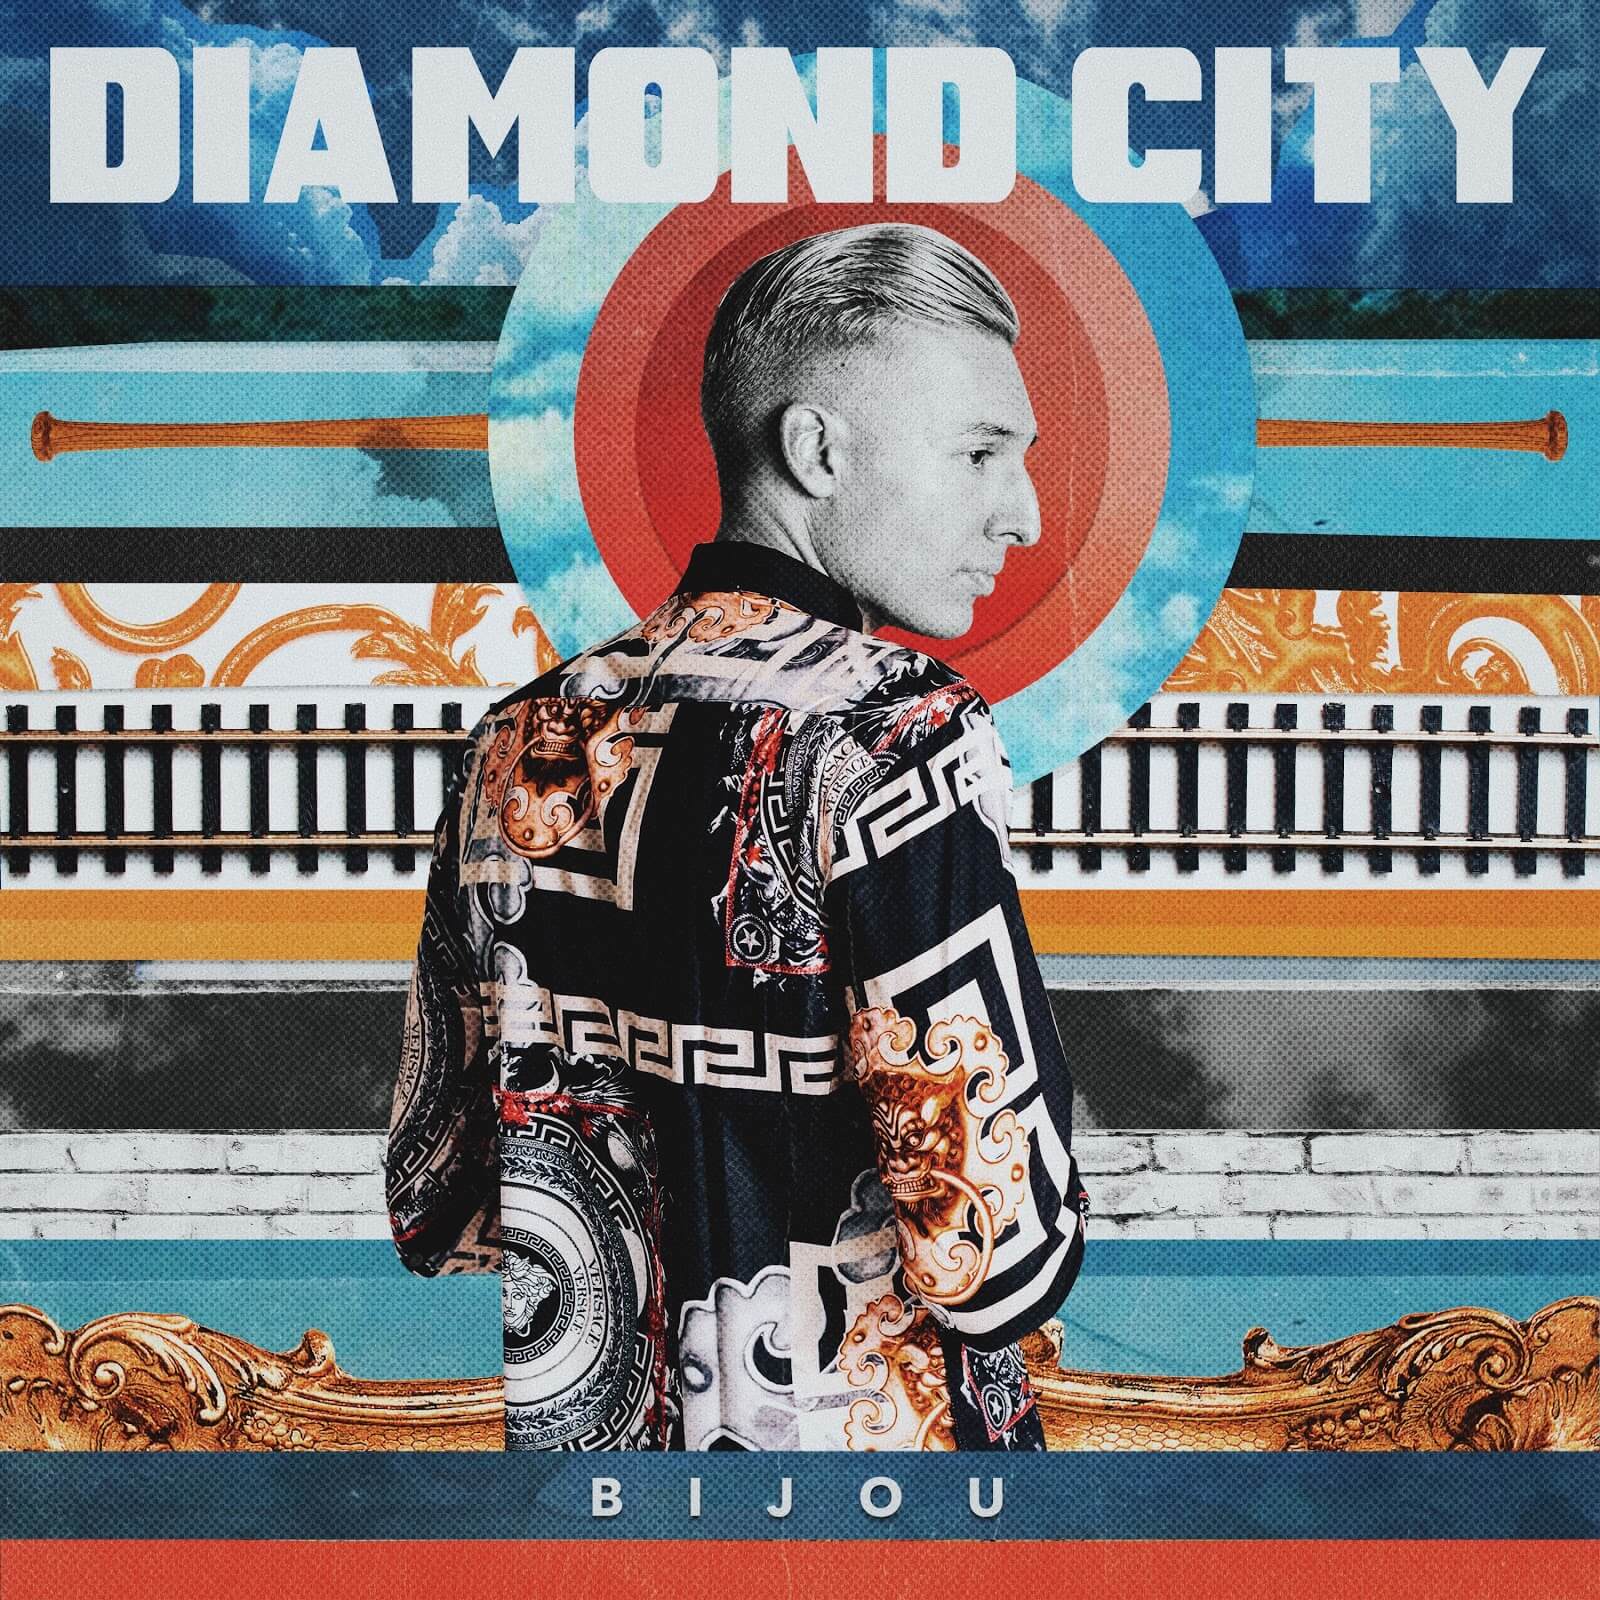 Bijou Shows Off with Debut Album ‘Diamond City’ + Interview